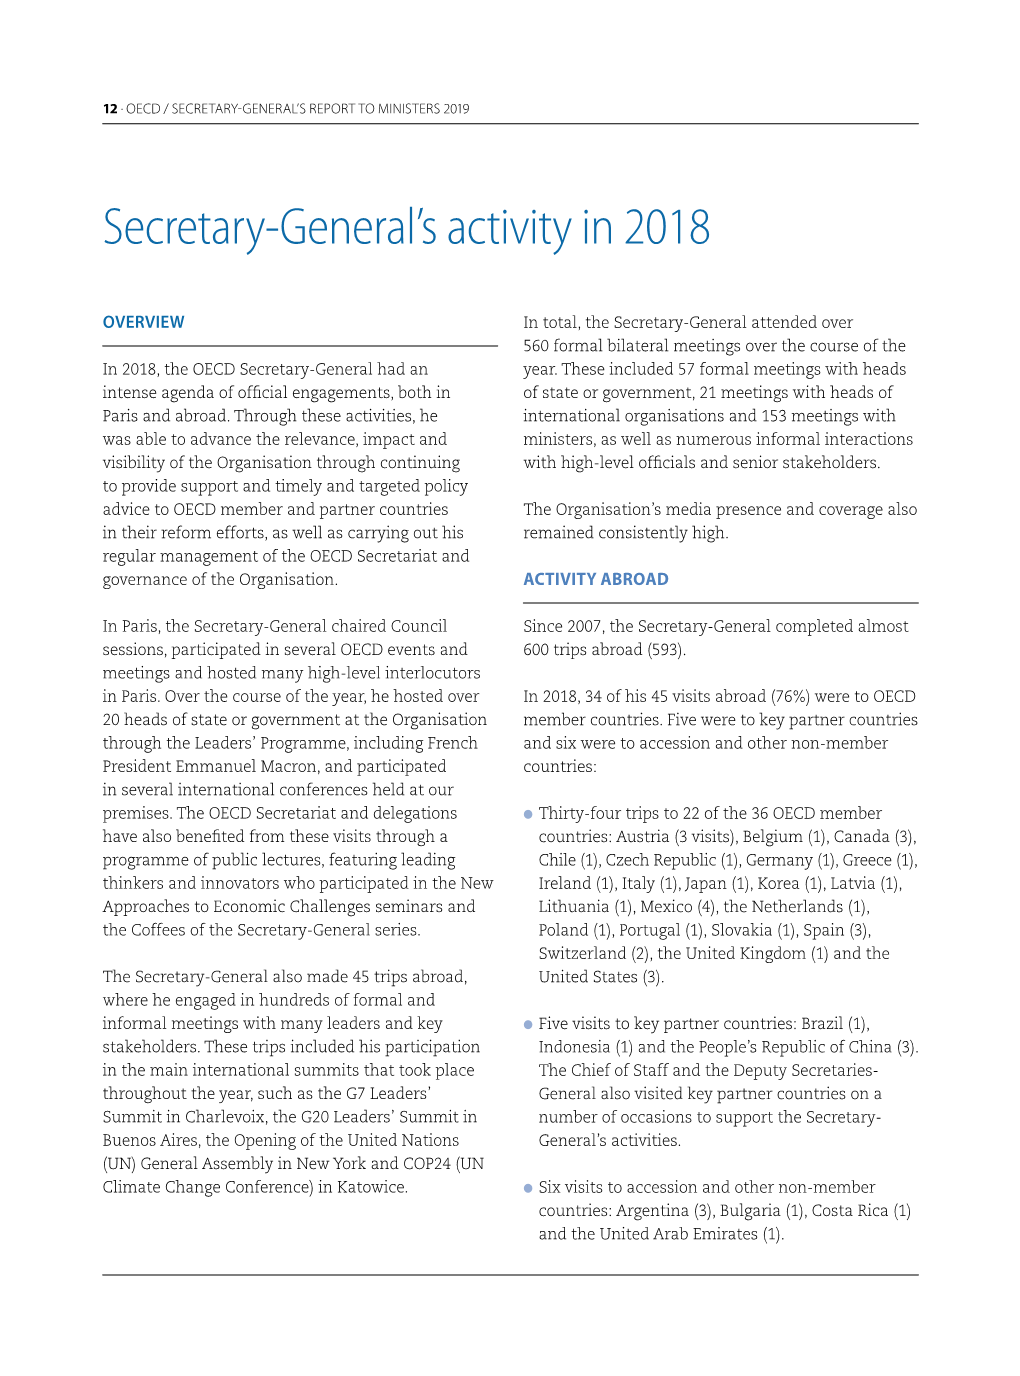 Secretary-General's Activity in 2018